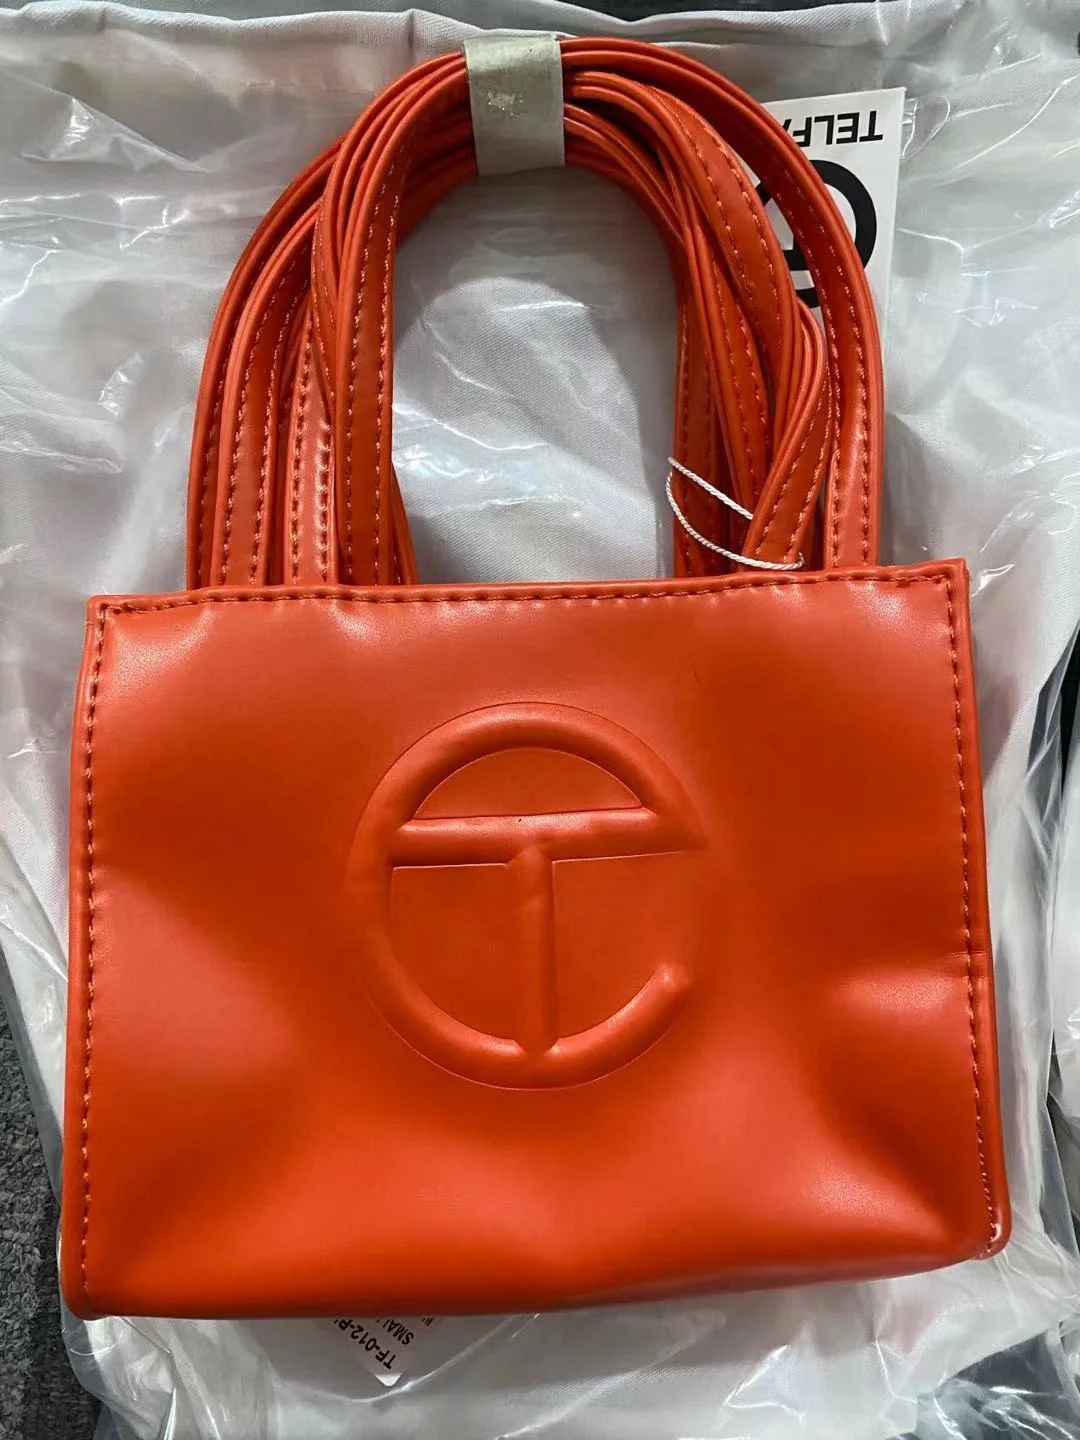 
S M Size Telfar Bag Crossbody Handbags Tote bags Telfar Luxury Purses For Women 